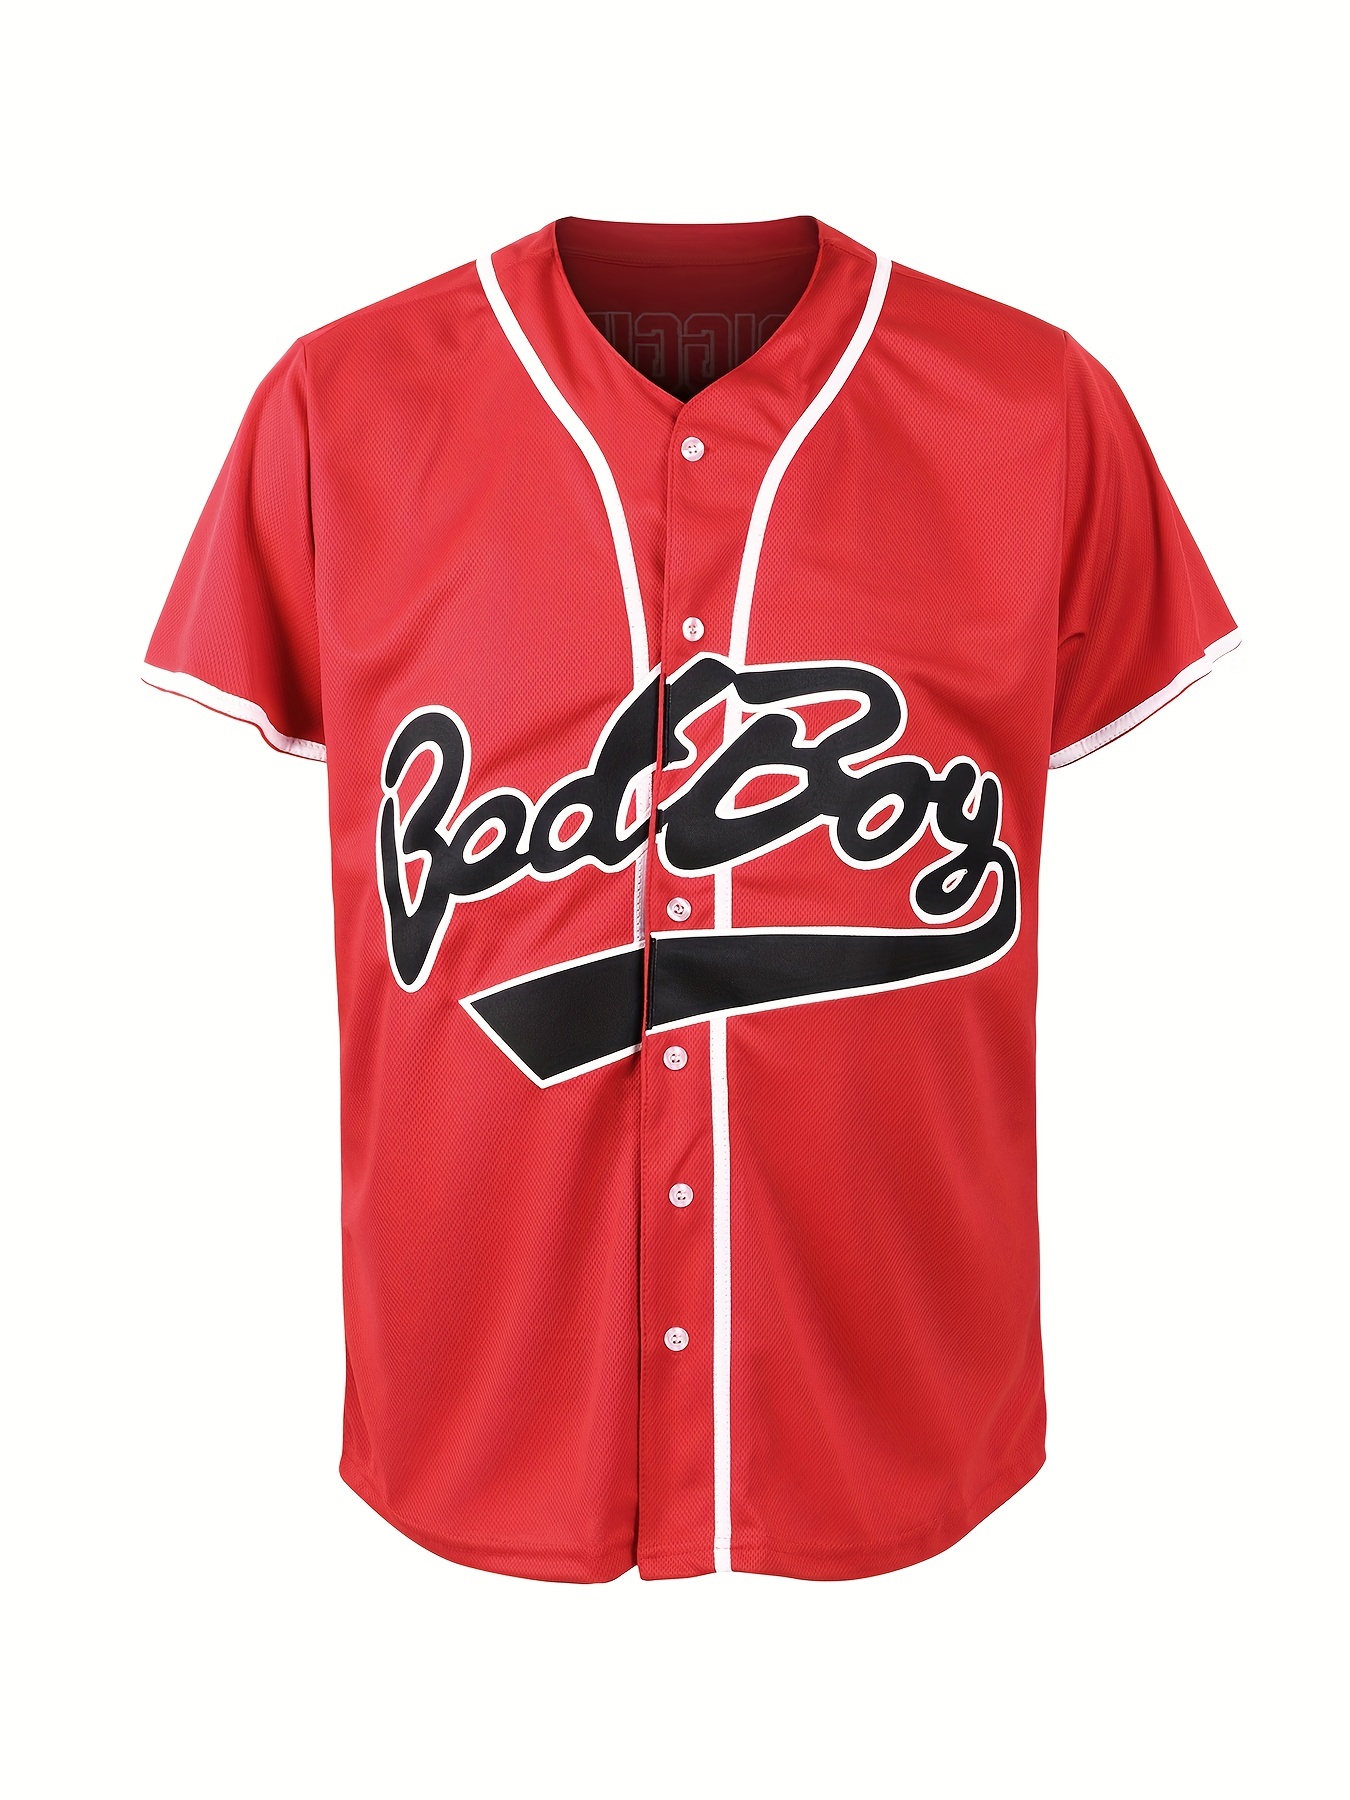 Mens Bad Boy 10 Biggie Red Baseball Jersey Button Shirt Embroidery Stitch  Badboy Jersey For 90s Retro Baseball Shirt Sports Uniform S Xxxl, High-quality & Affordable